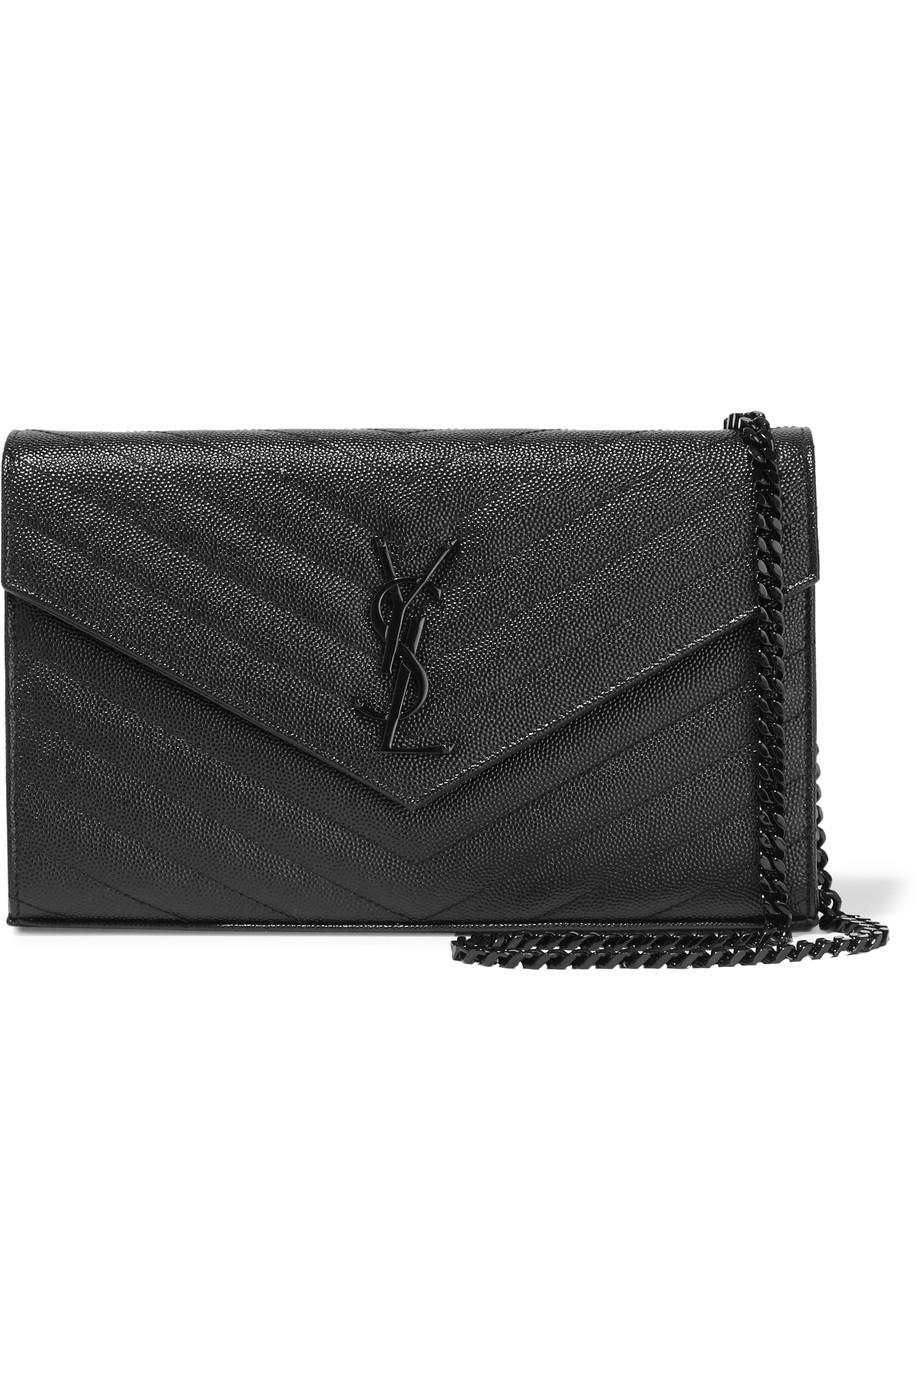 ysl monogram chain wallet black